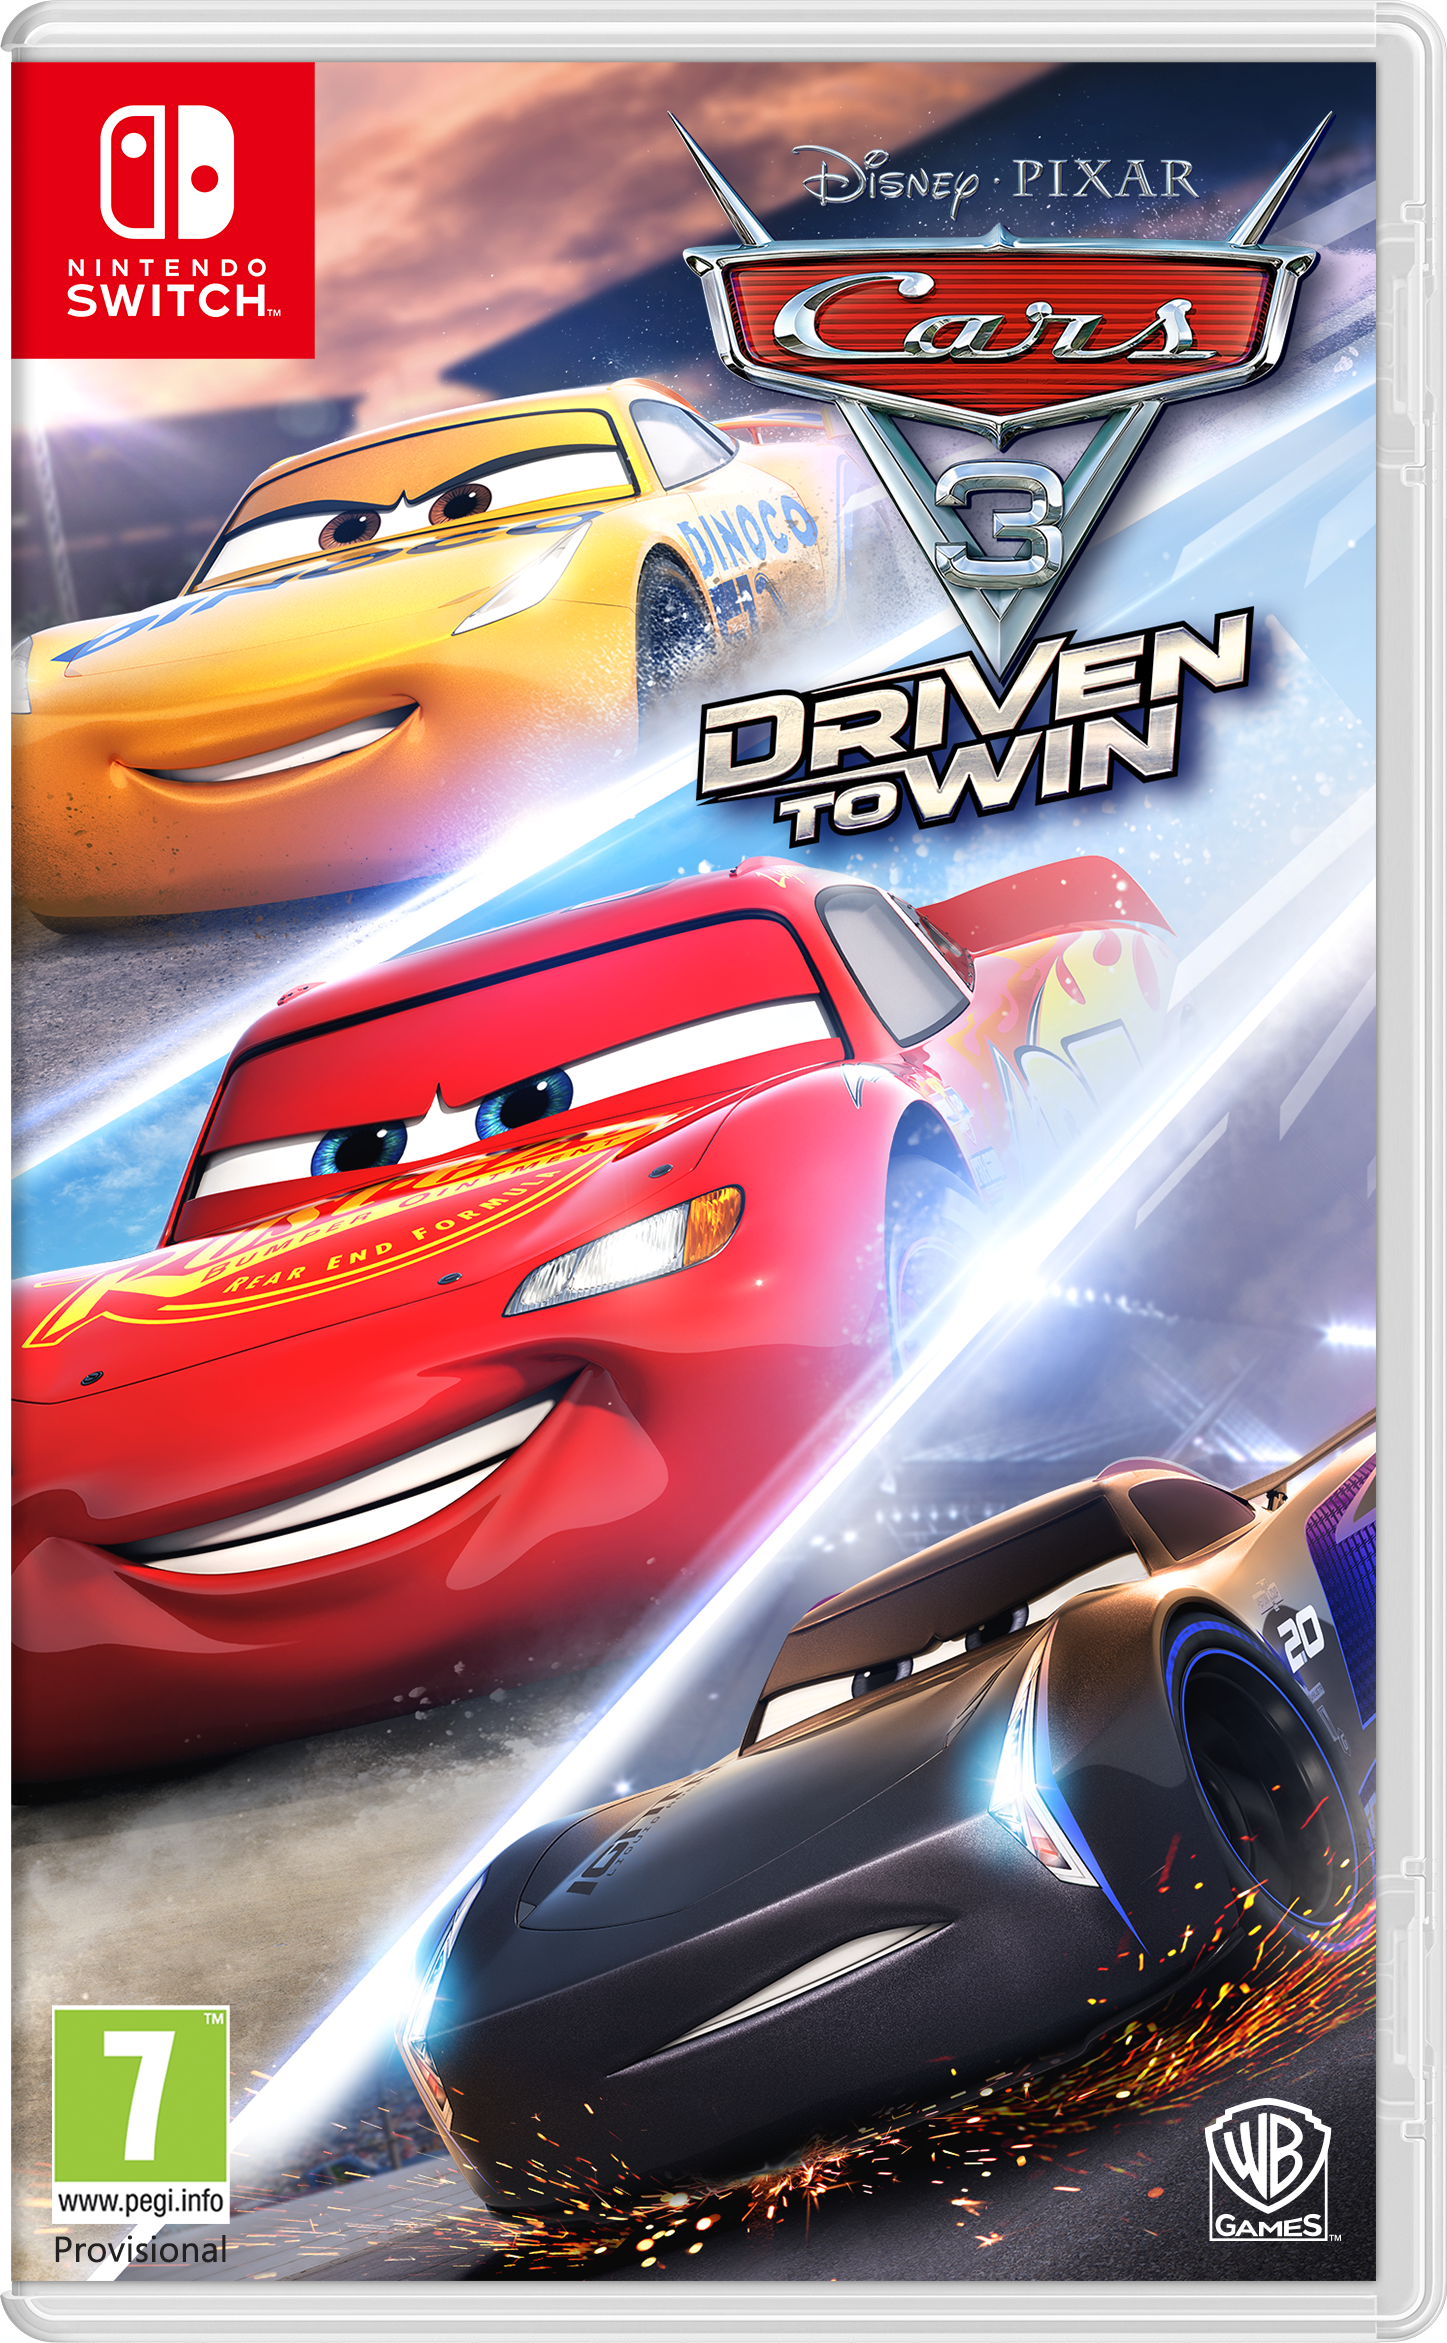 Disney Pixar Cars 3 Driven to Win 